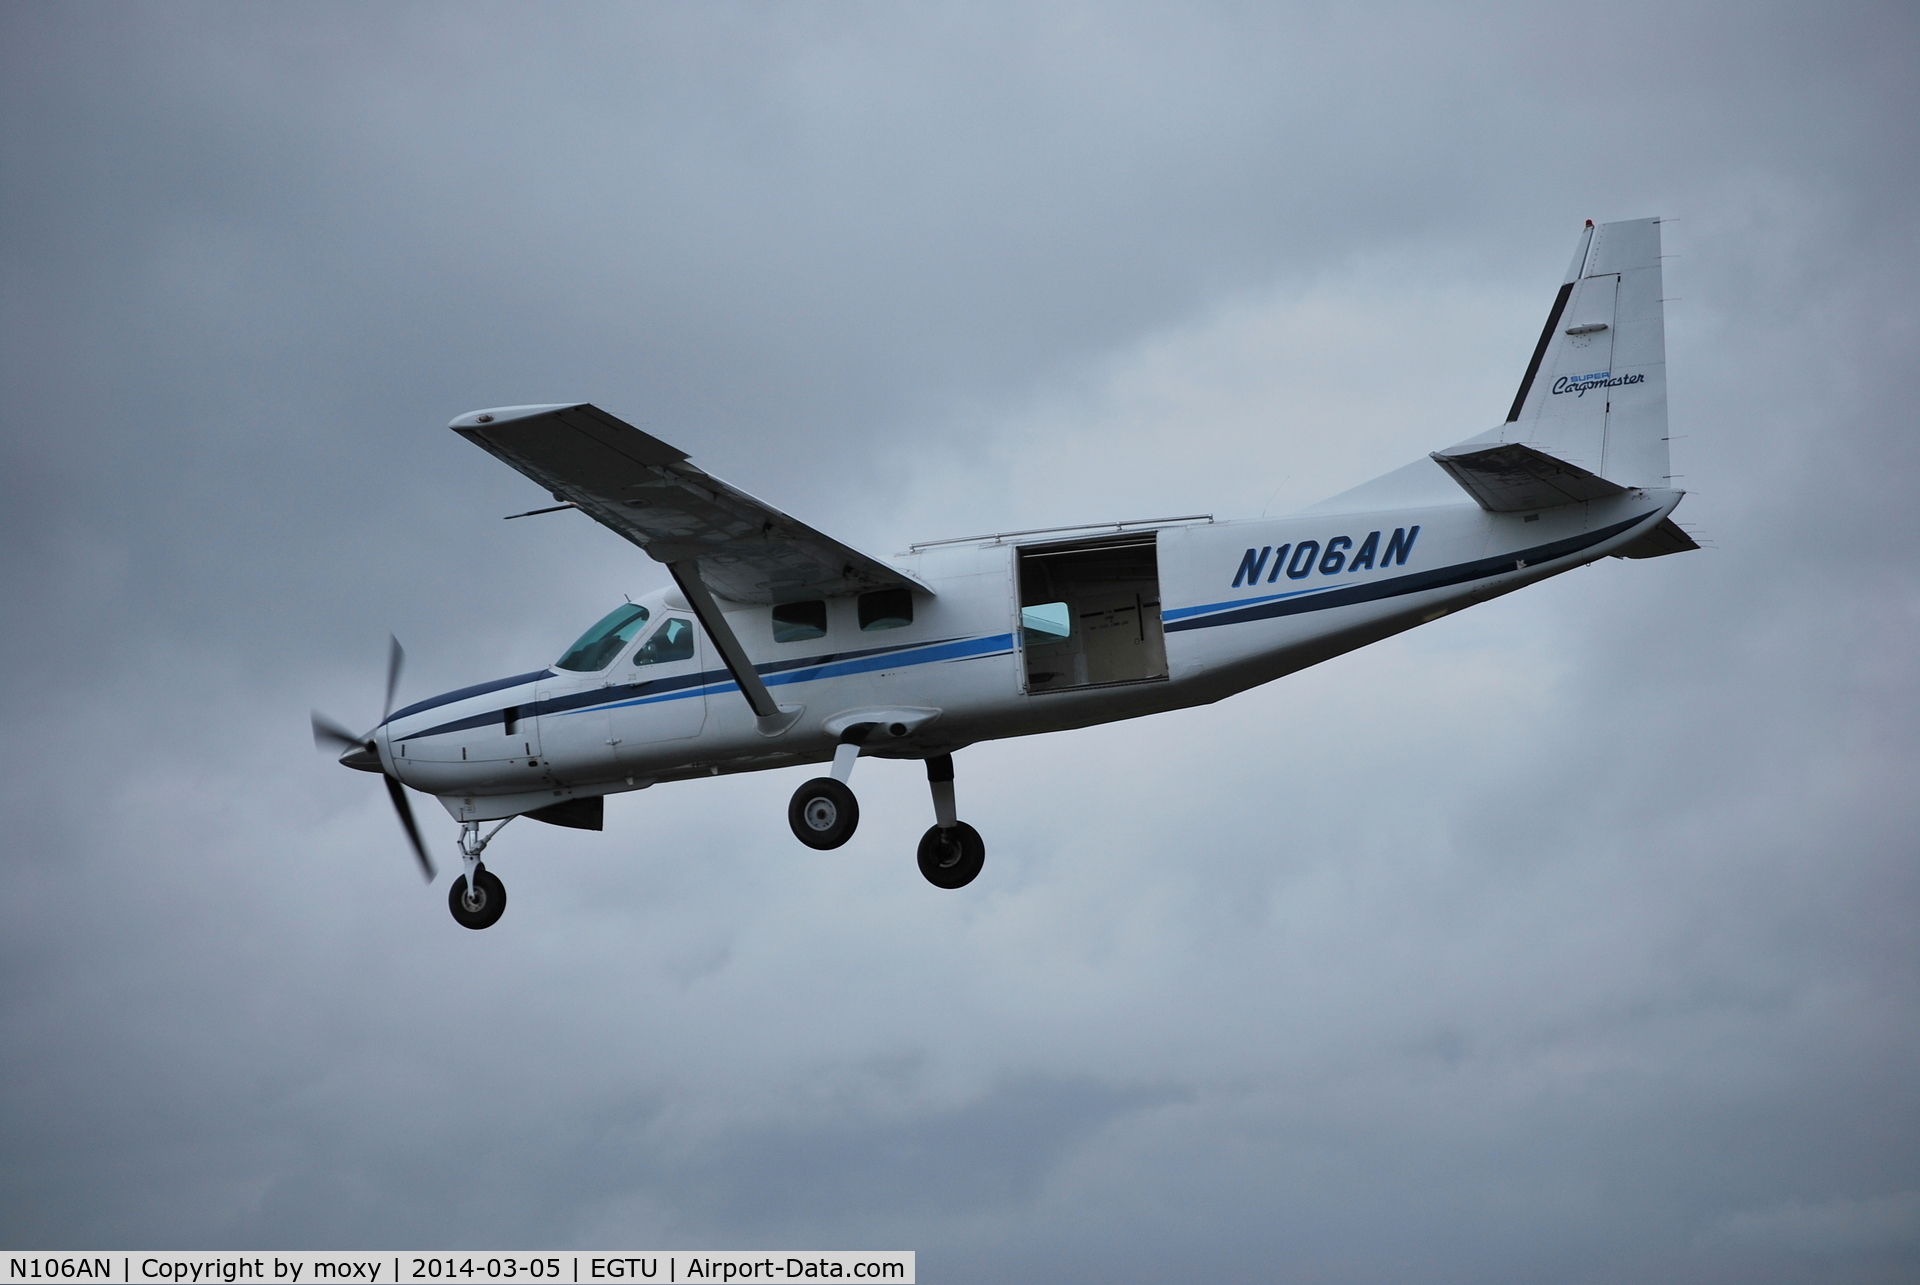 N106AN, 2002 Cessna 208B Super Cargomaster C/N 208B0917, Cessna 208B Caravan, used for parachute dropping.